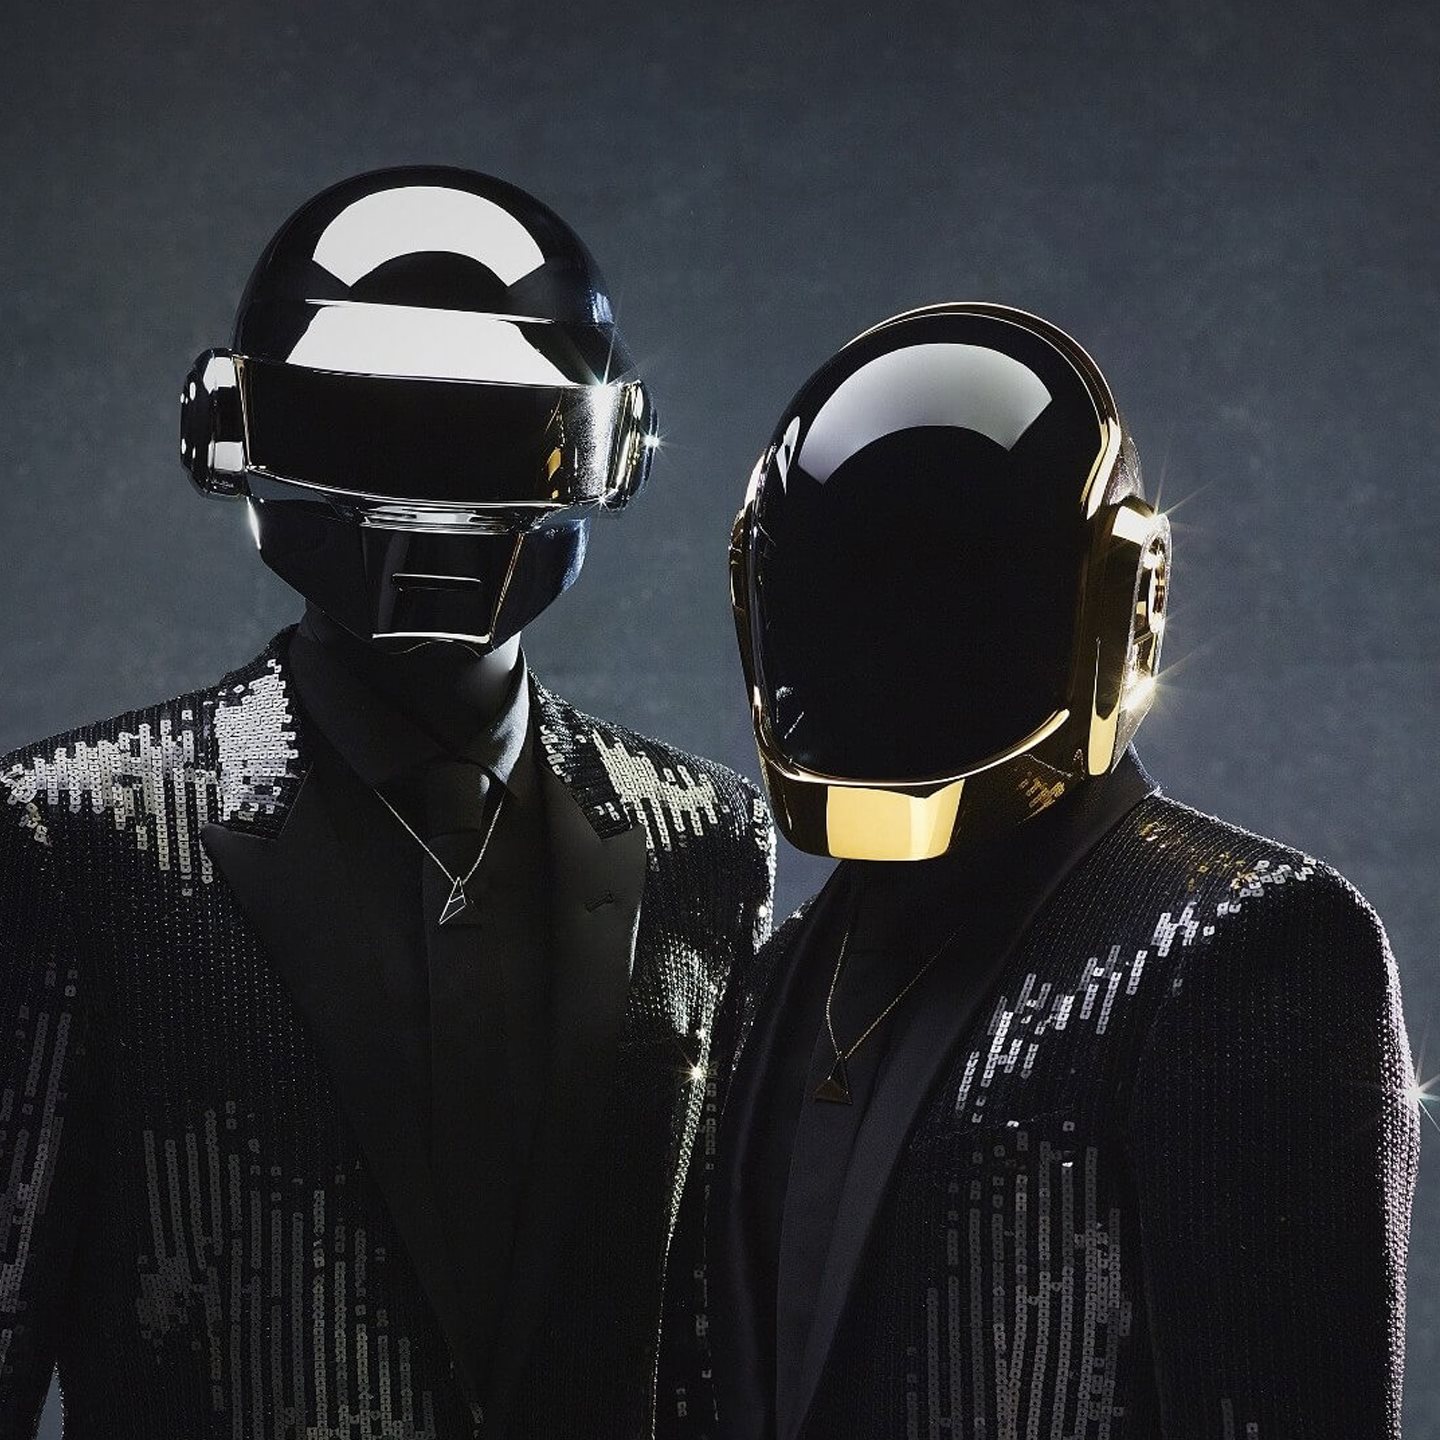 Daft Punk · Artist Profile